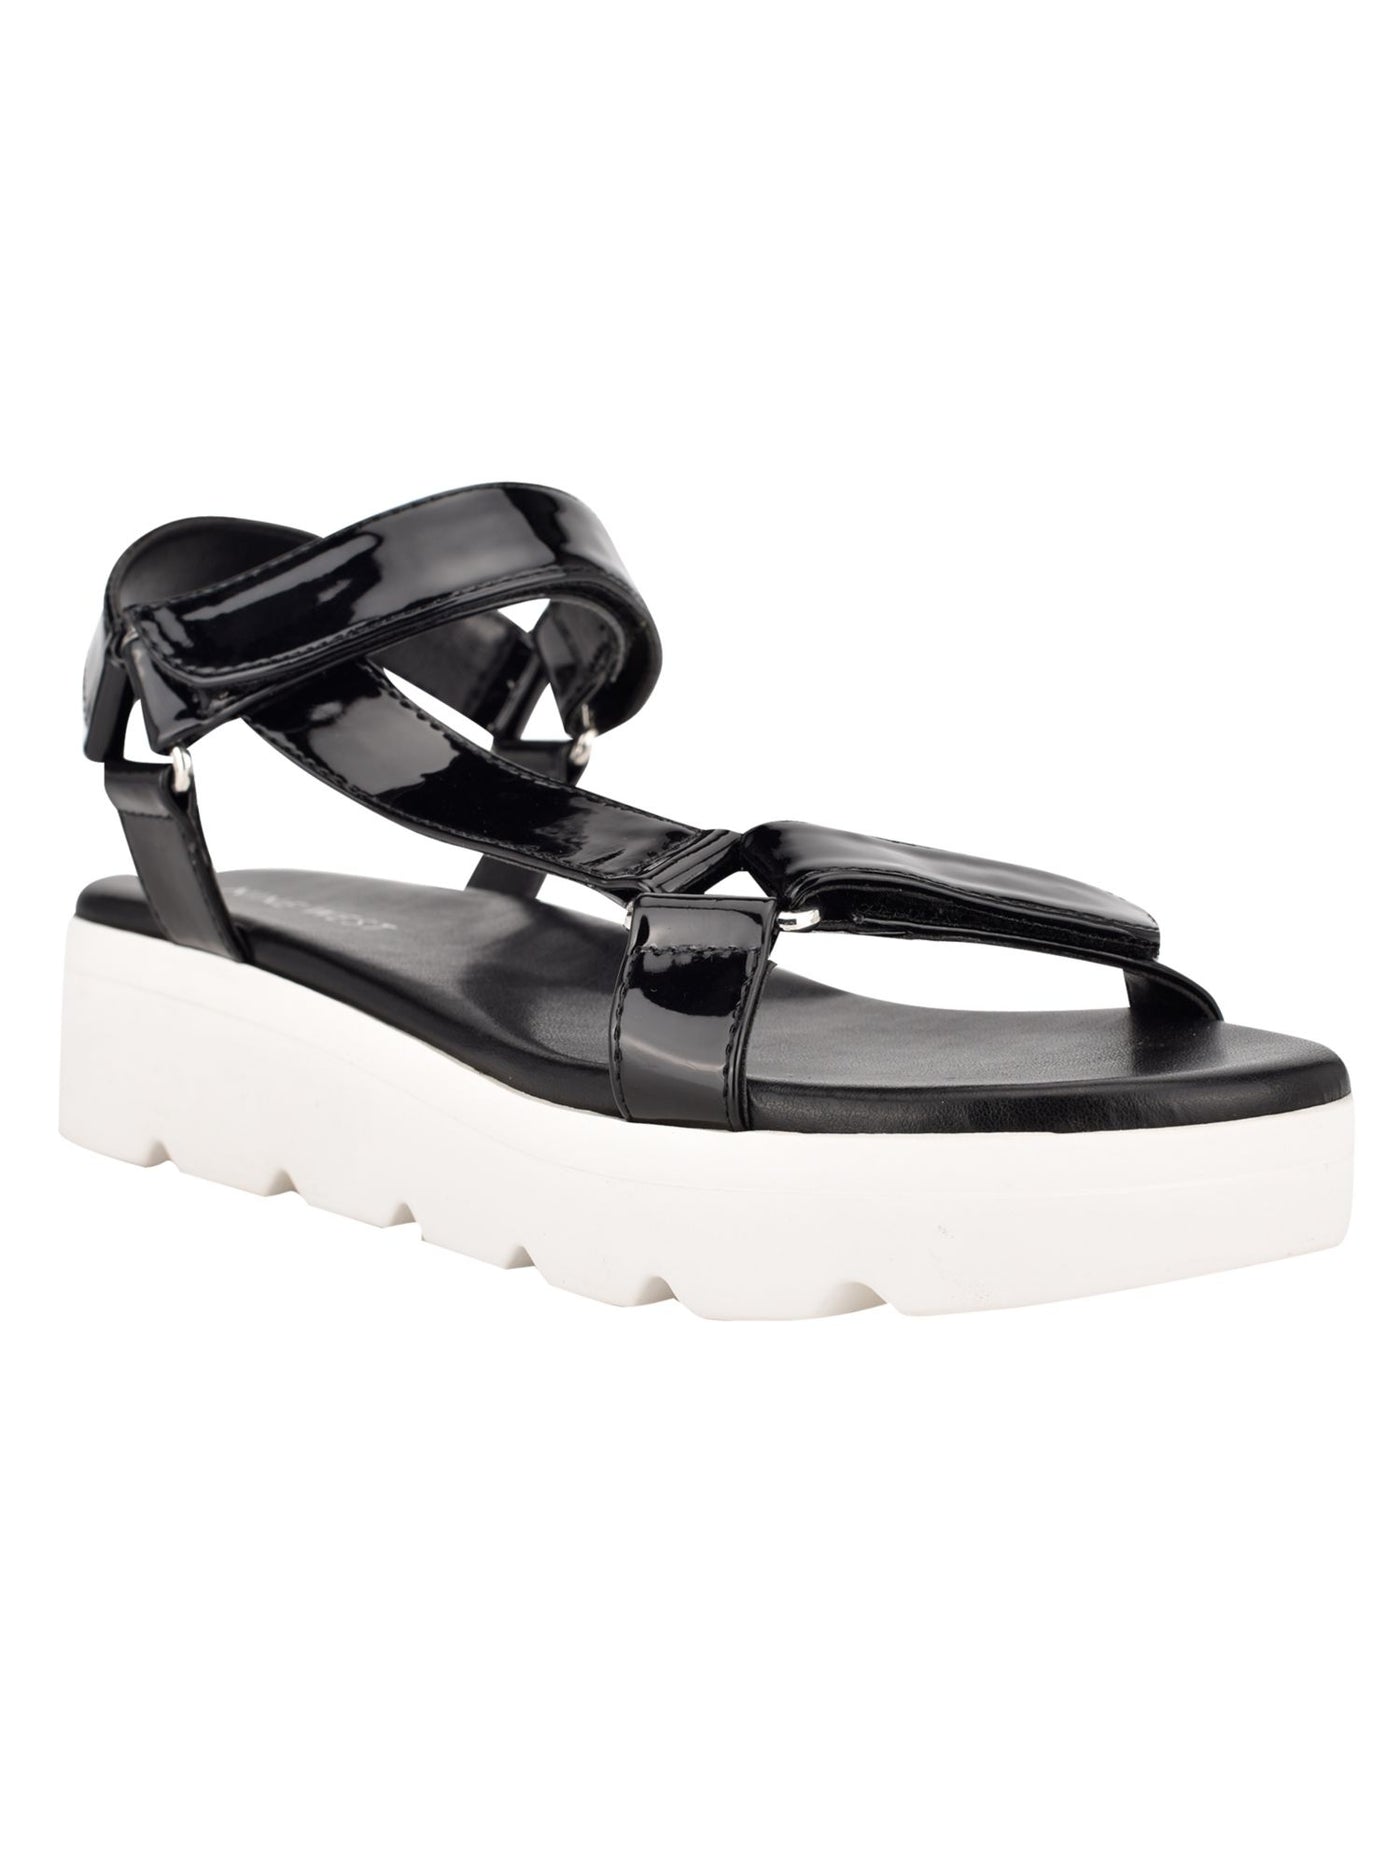 NINE WEST Womens Black Comfort Adjustable Strap Arch Support Bringly3 Open Toe Platform Sandals Shoes 6 M